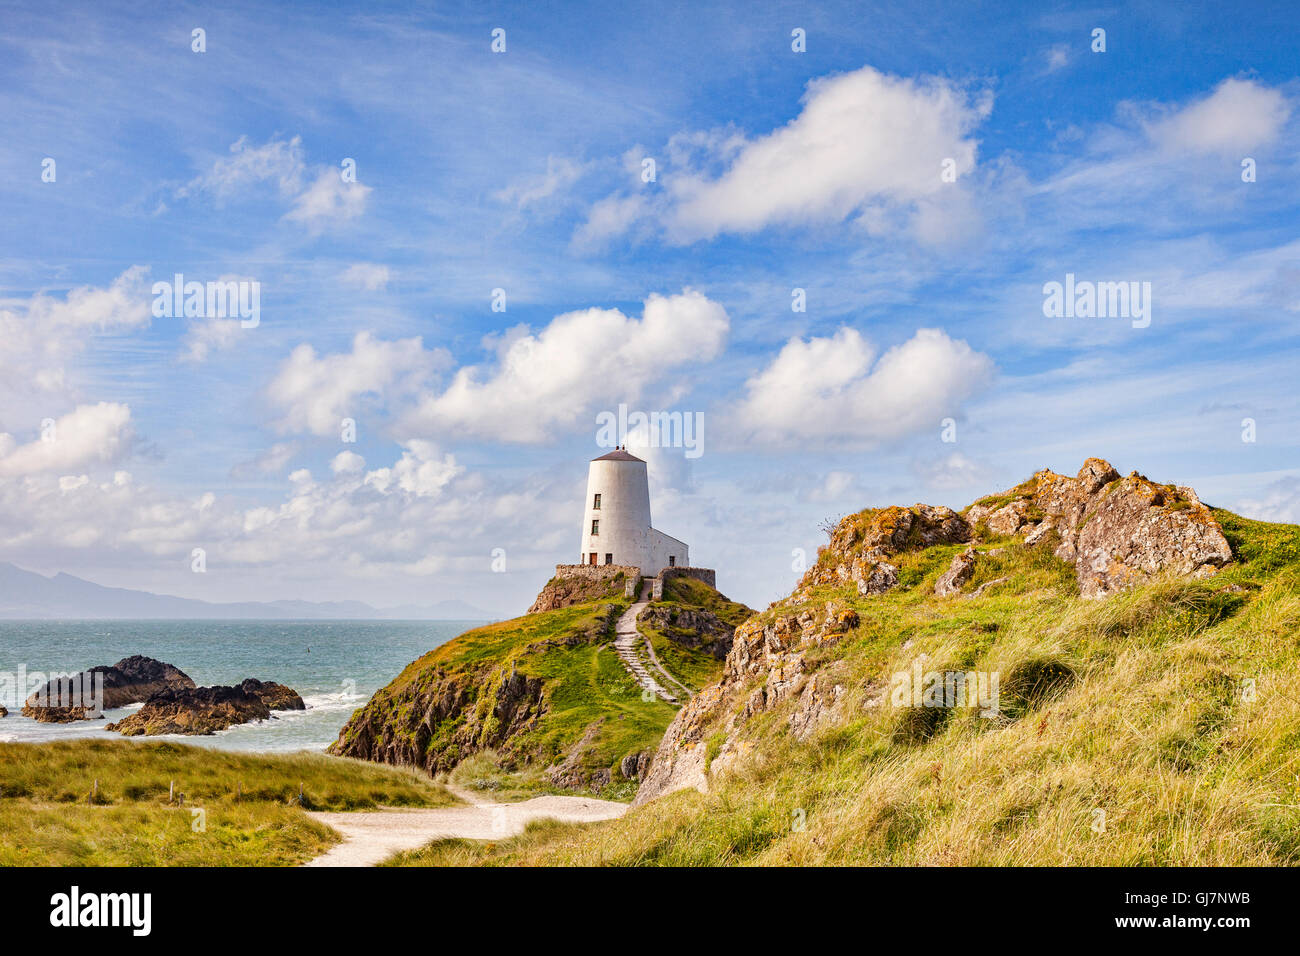 Twr Mawr, the old lighthouse on the tidal island of Ynys Llanddwyn, Newborough, Anglesey, Wales, UK Stock Photo